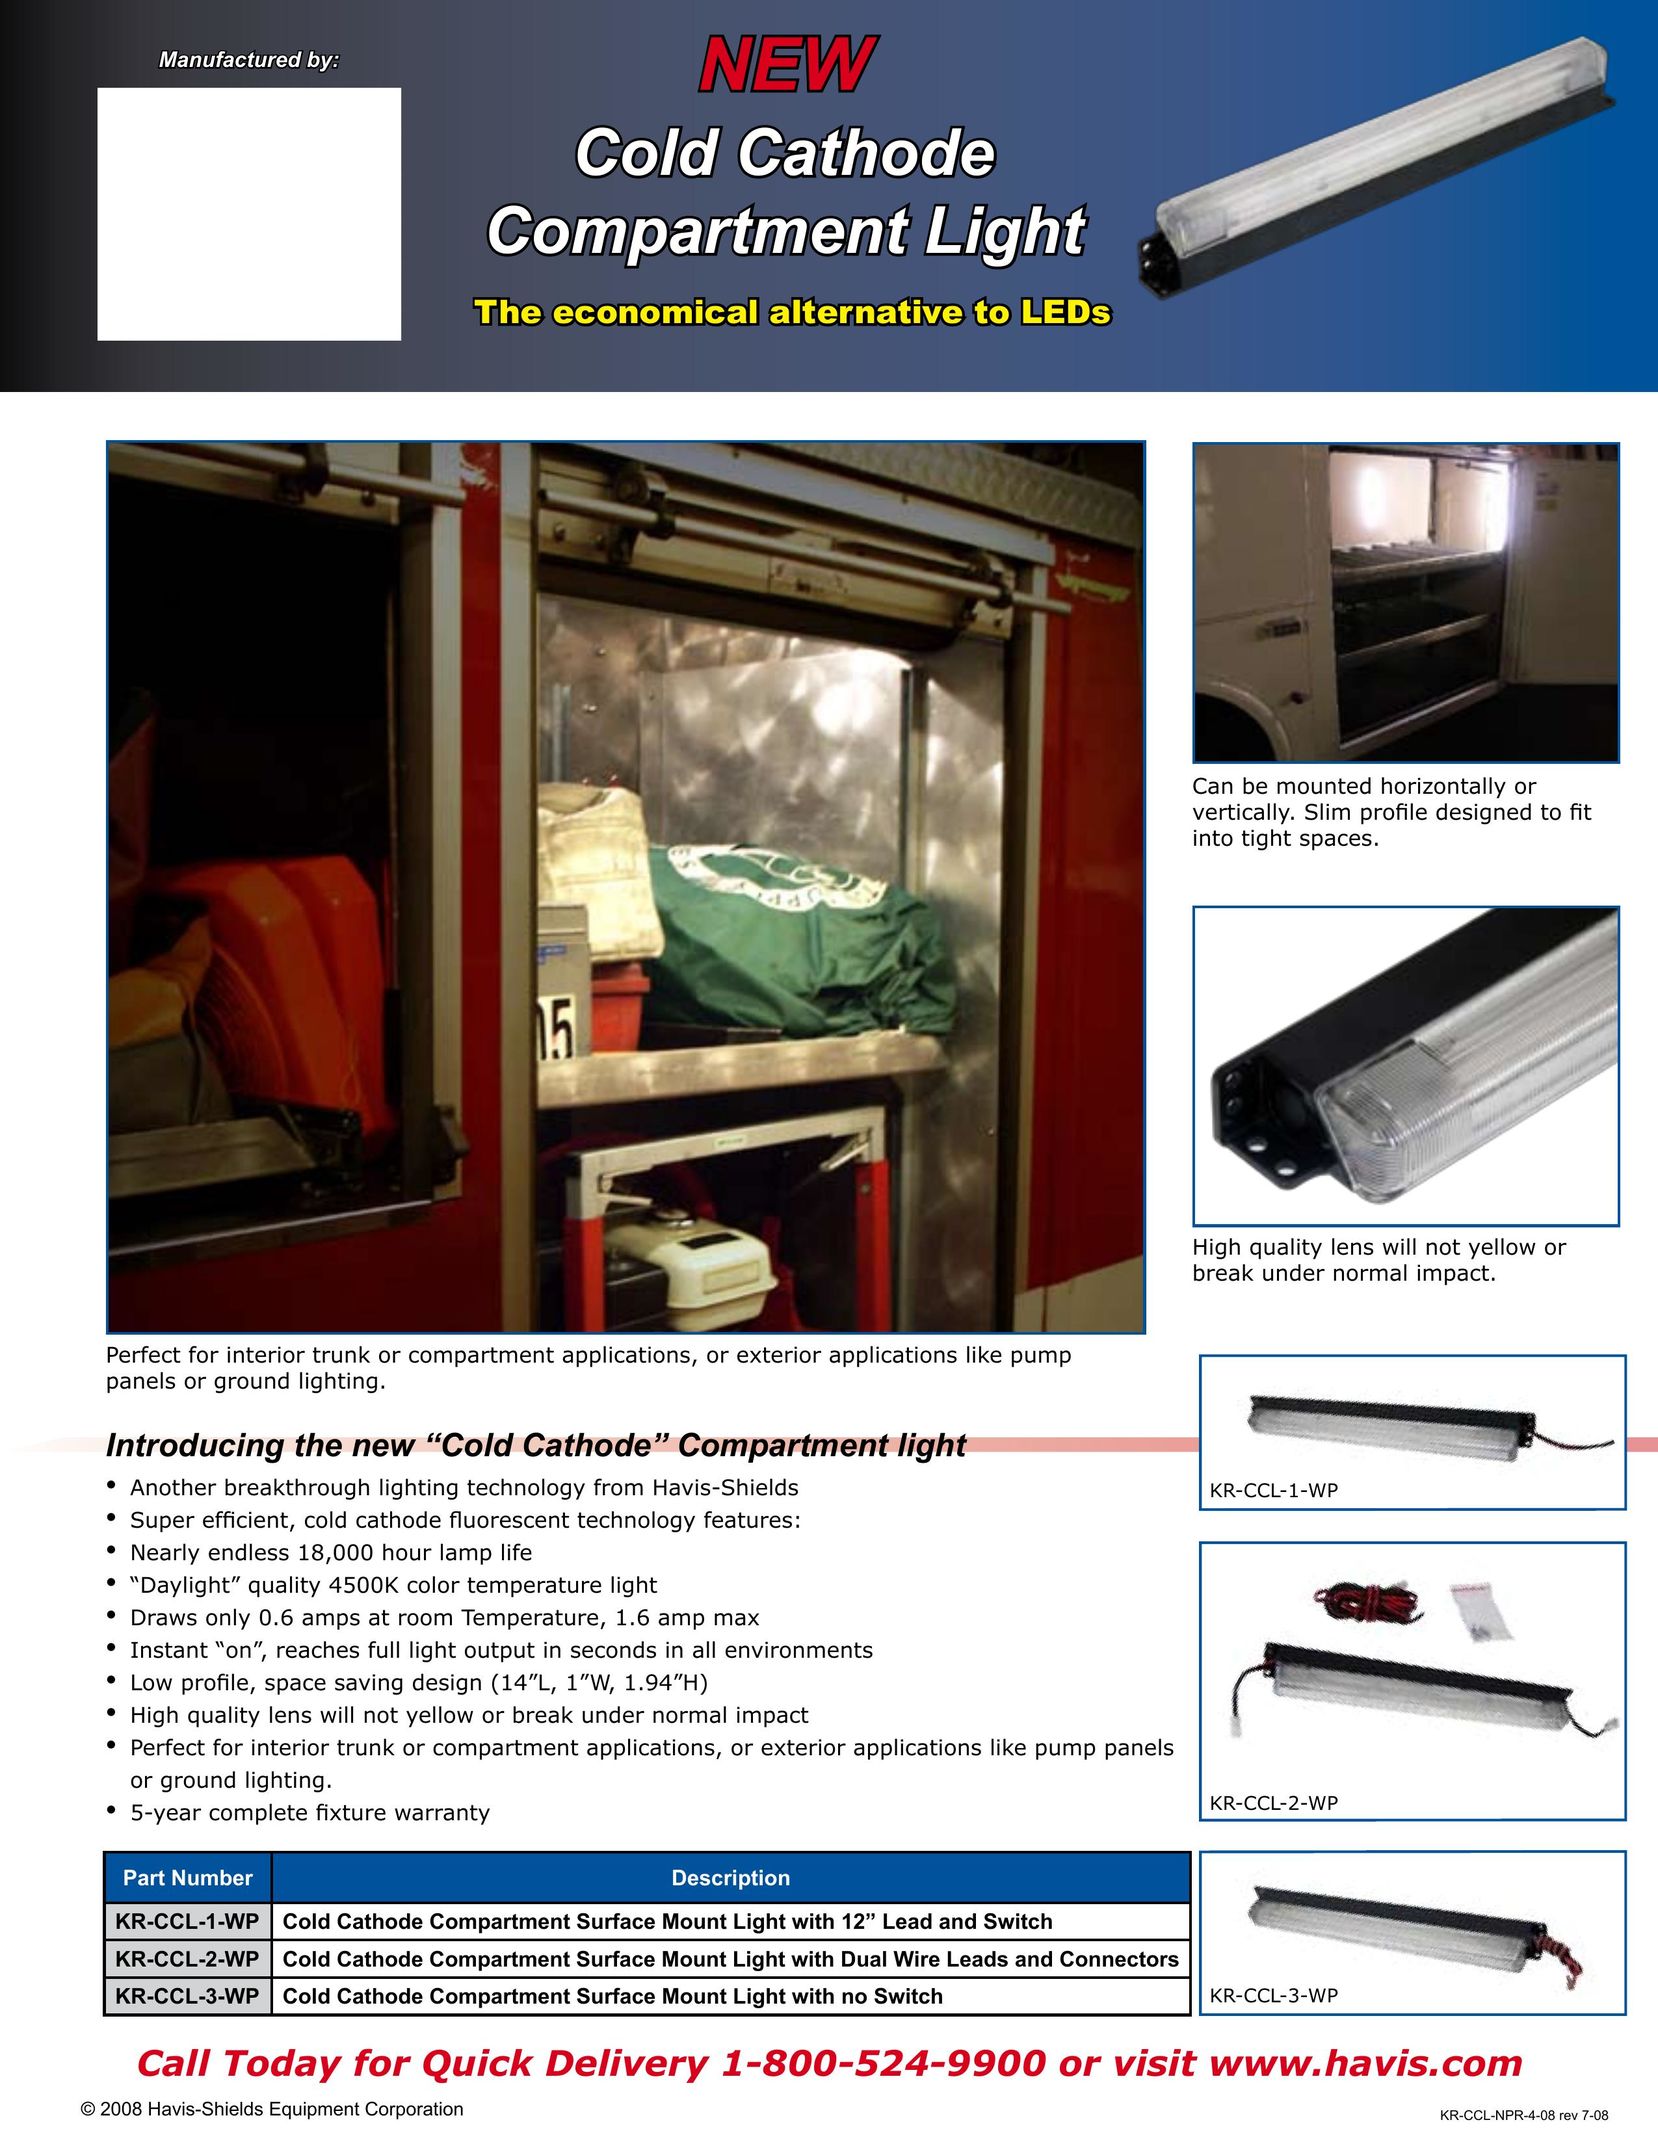 Havis-Shields KR-CCL-2-WP Indoor Furnishings User Manual